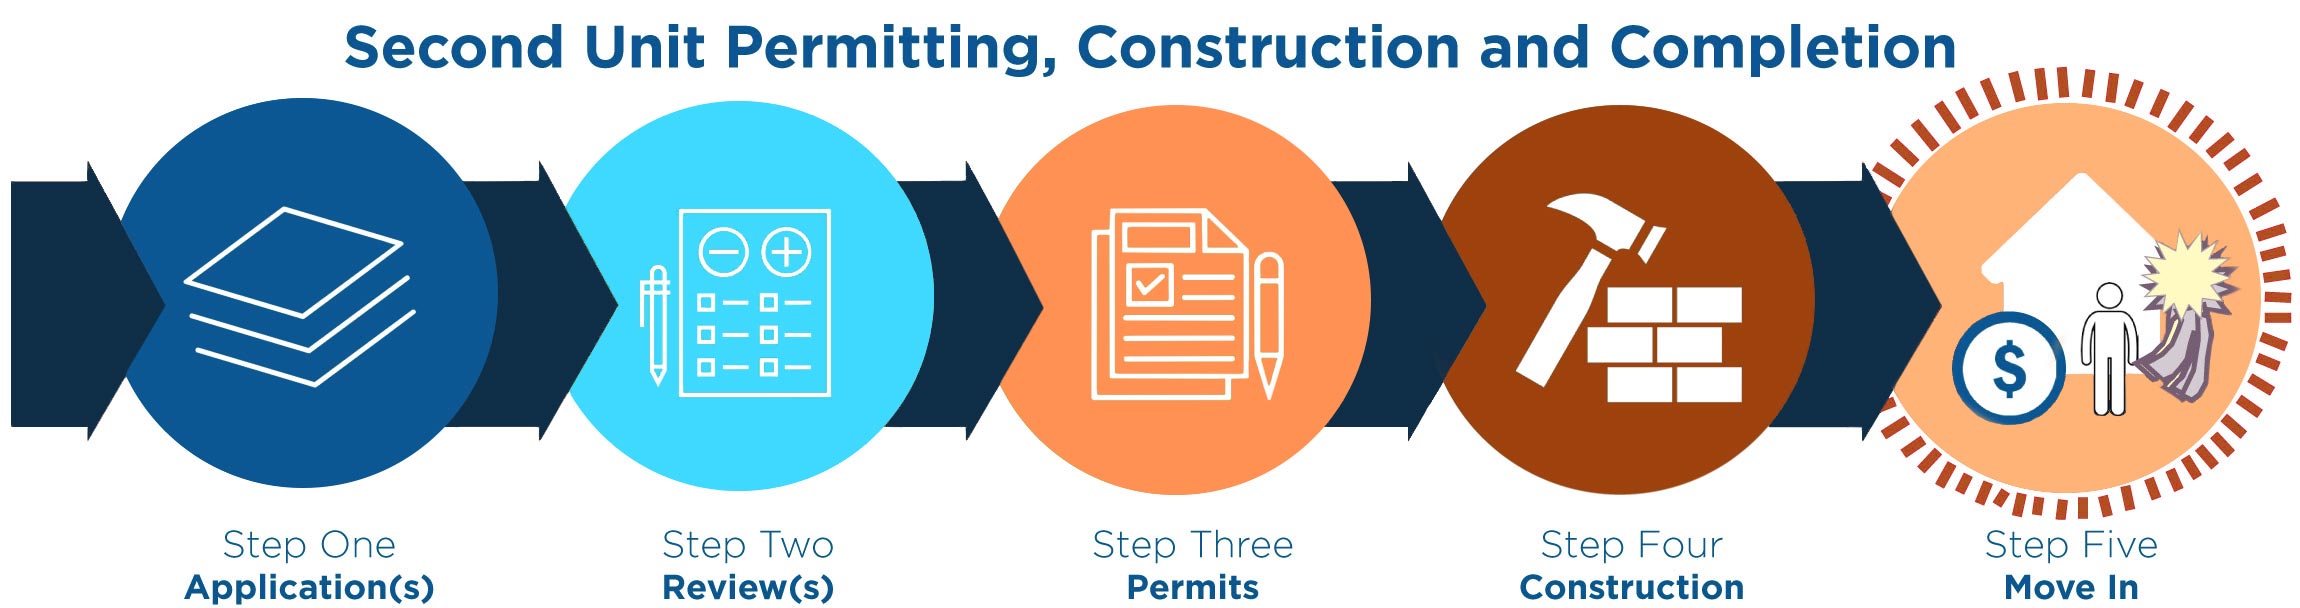 permitting process graphic